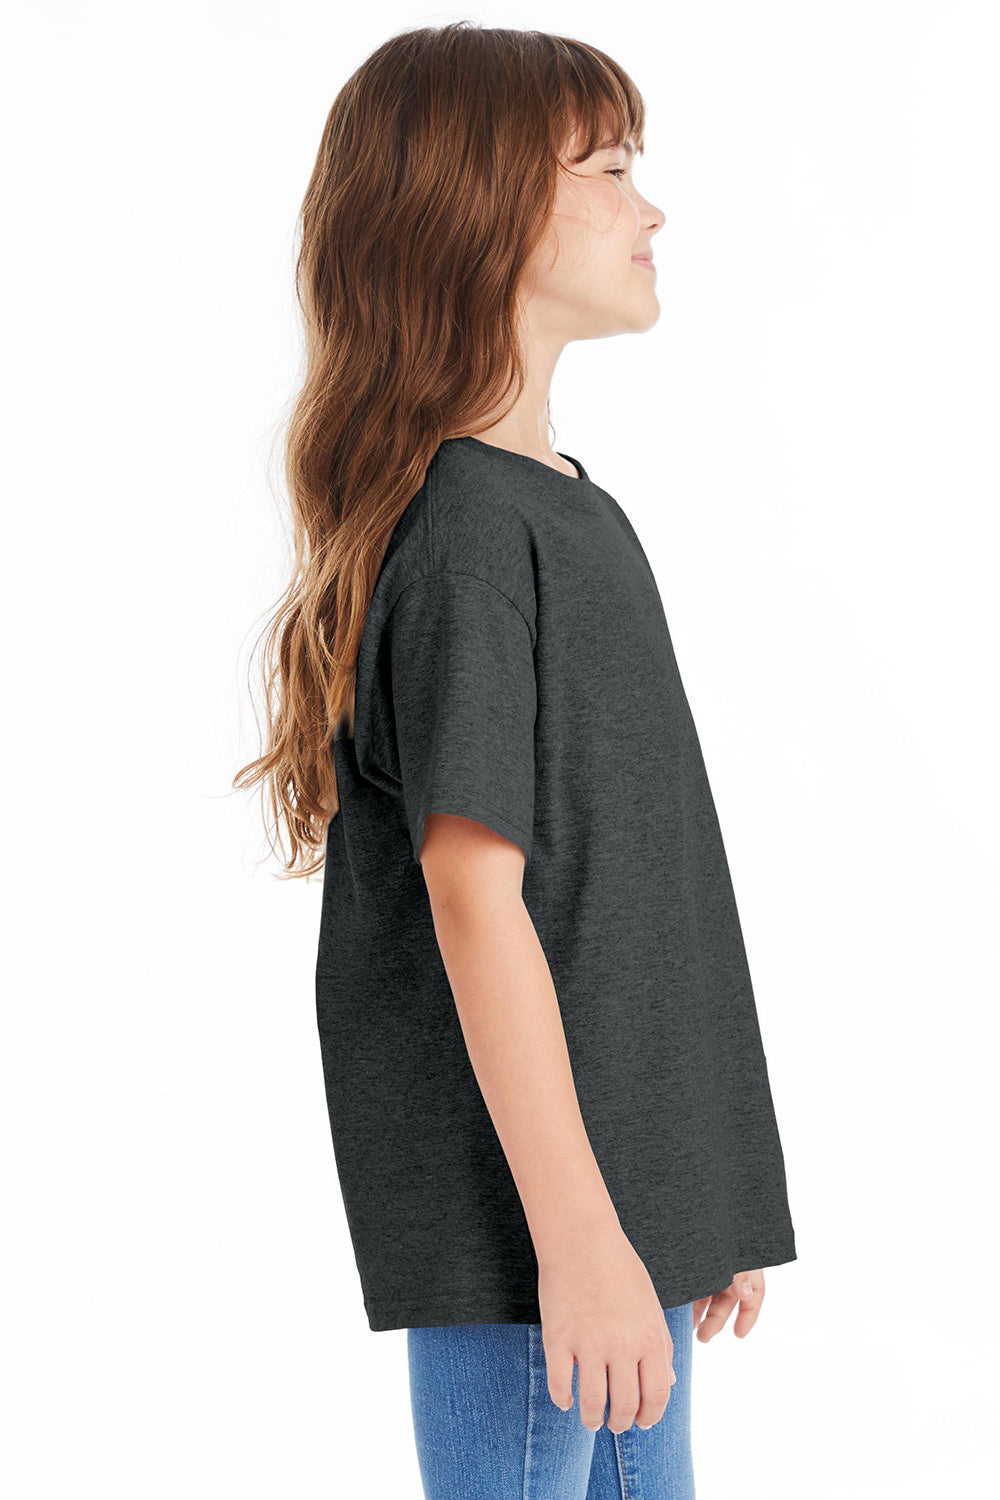 Hanes 5480 Youth ComfortSoft Short Sleeve Crewneck T-Shirt Heather Charcoal Grey SIde